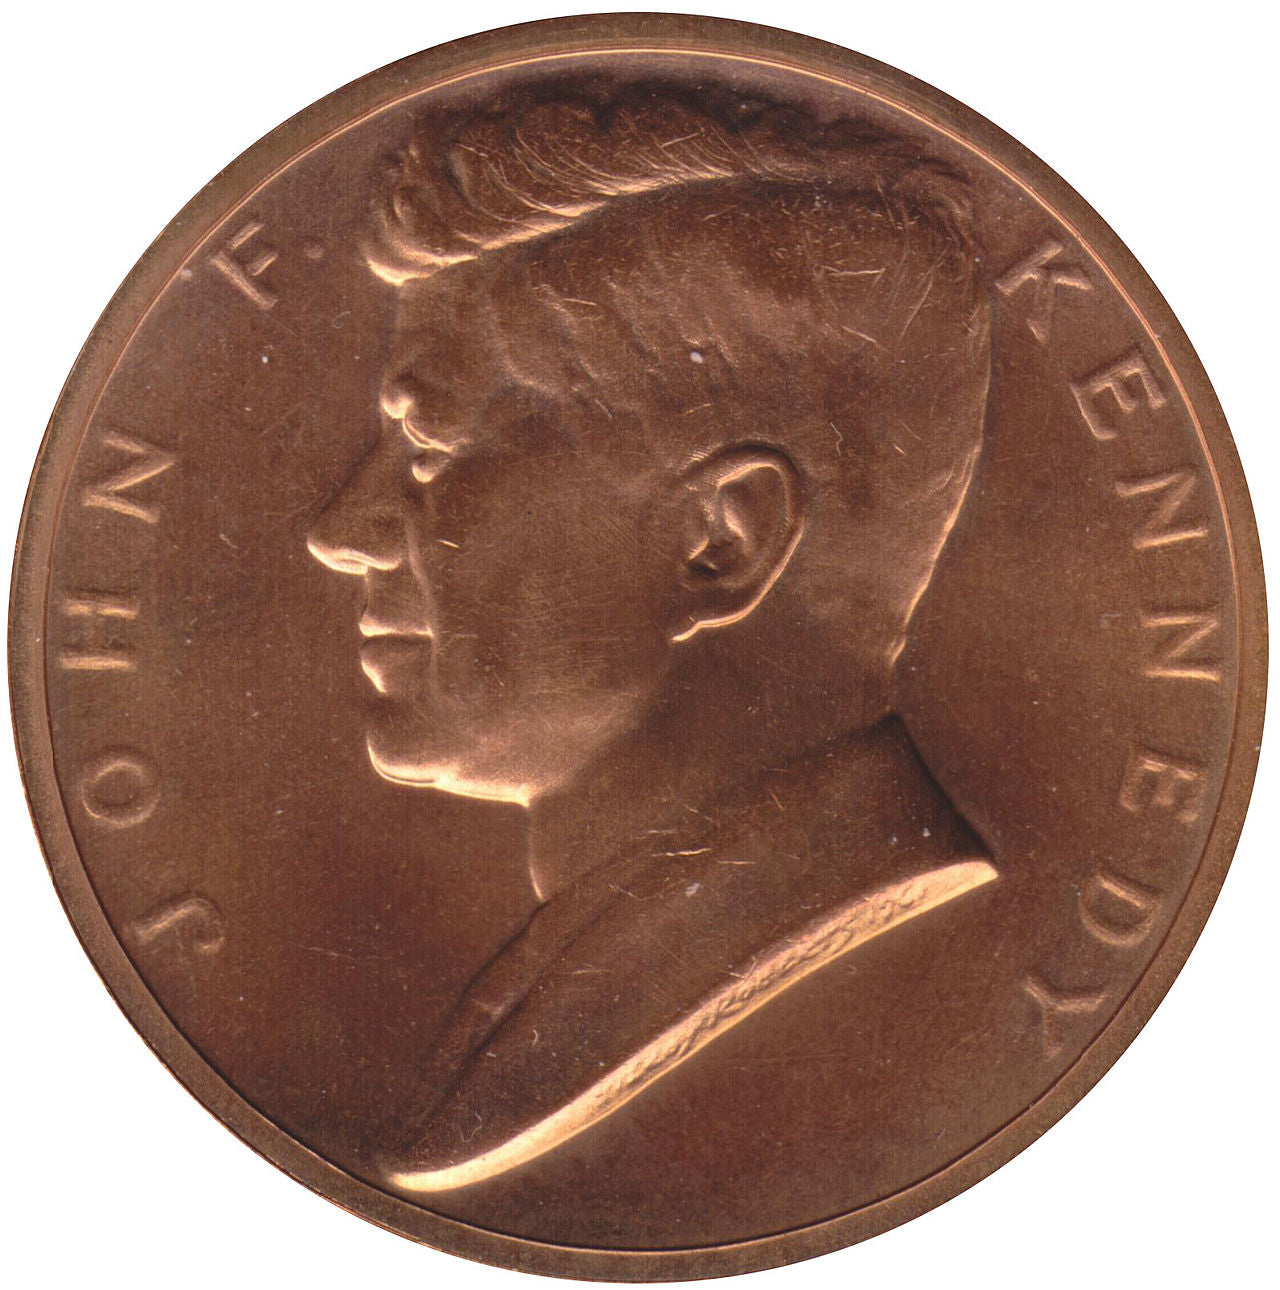 What Makes a 1964 Kennedy Half Dollar Rare?